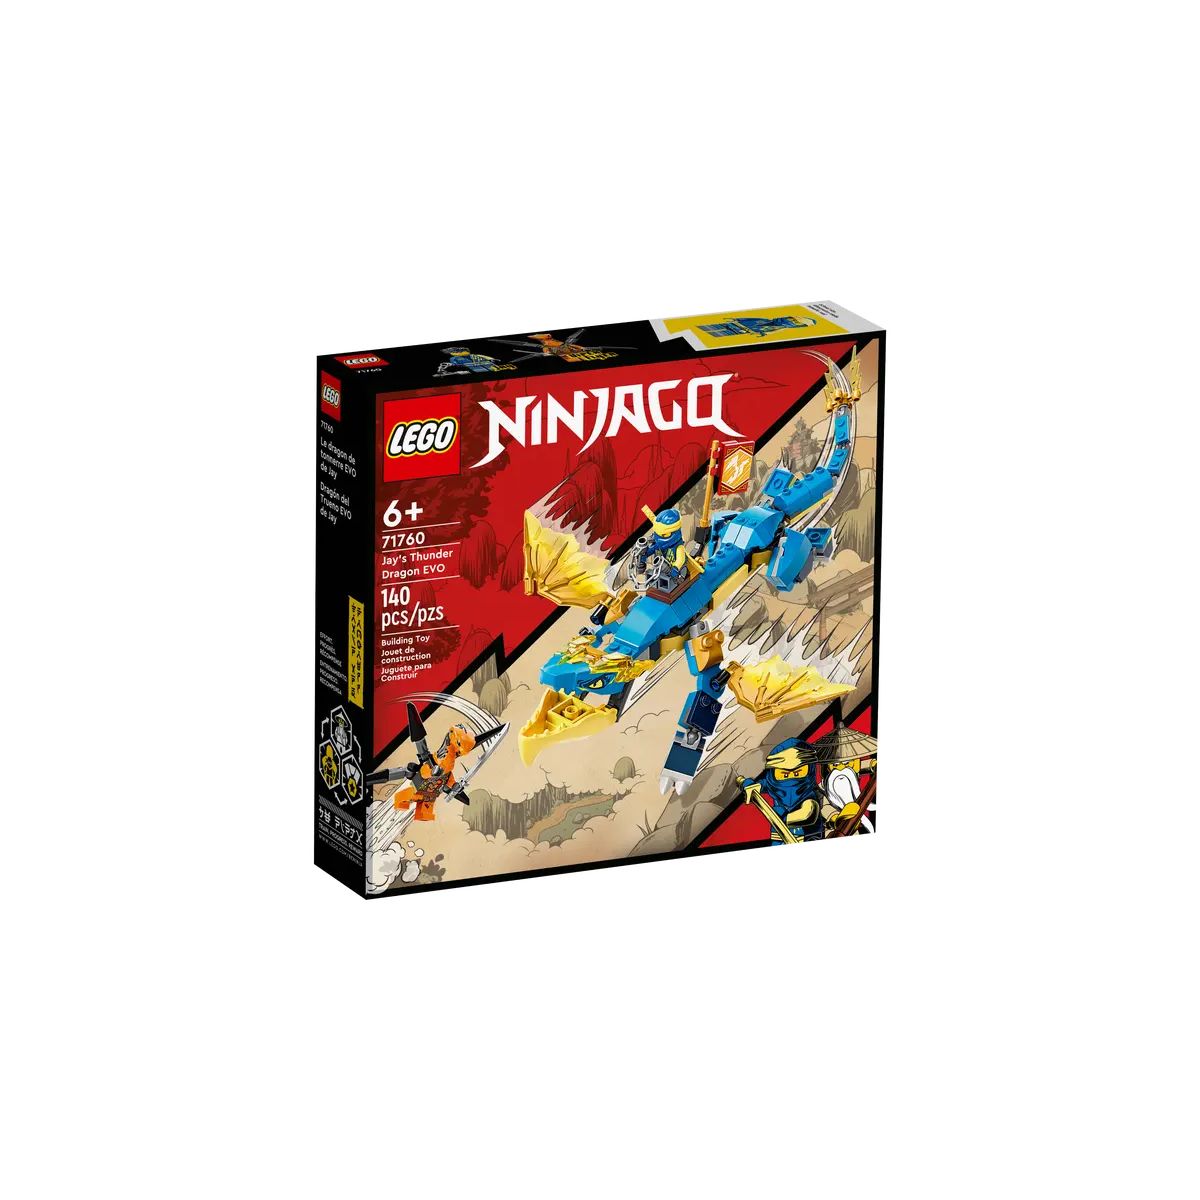 LEGO Ninjago 71760 Jays Donnerdrache EVO